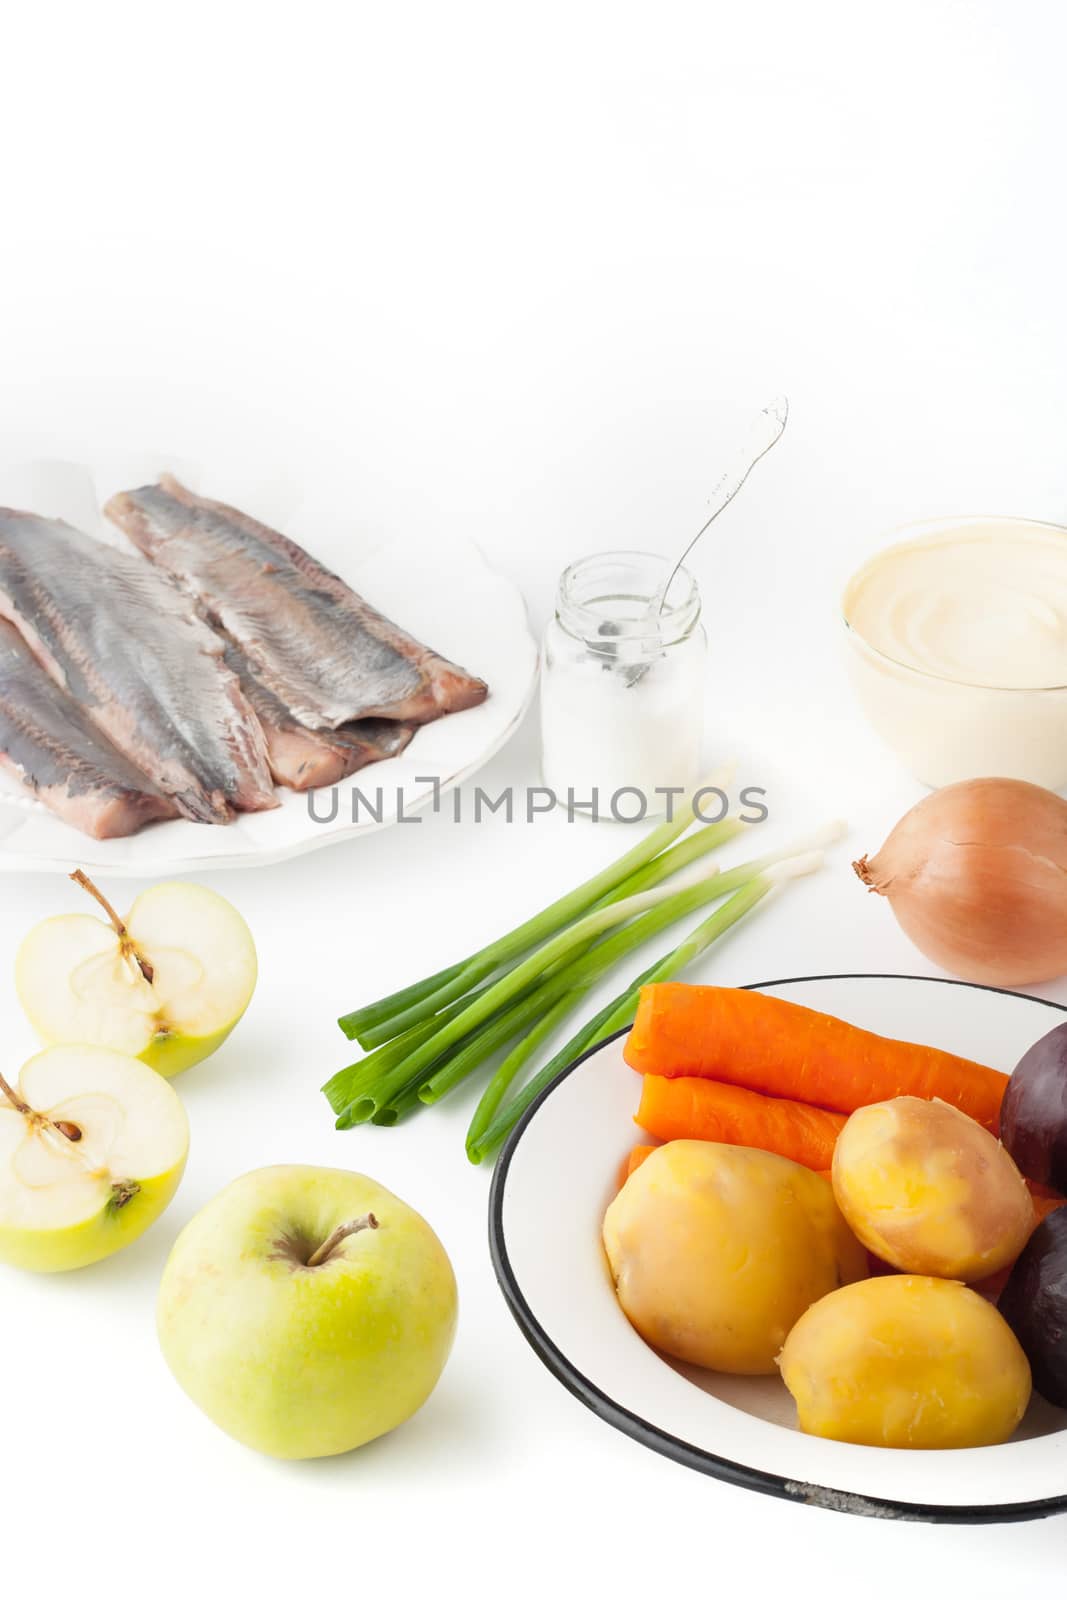 Ingredients for vegetable salad with apple by Deniskarpenkov